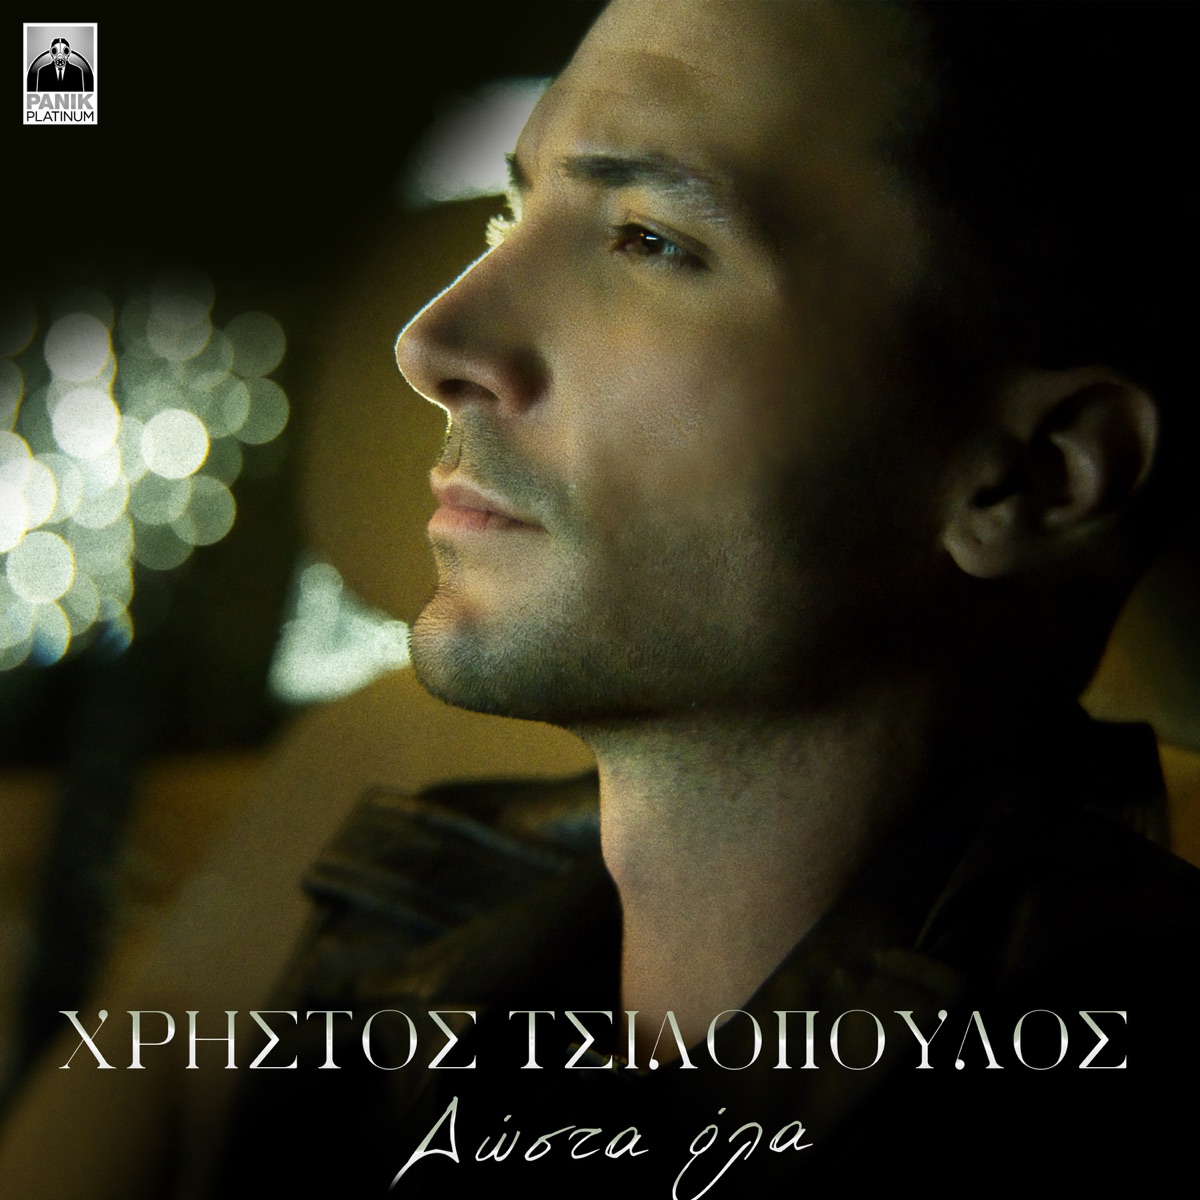 Dosta Ola - Single - Album by Christos Tsilopoulos - Apple Music